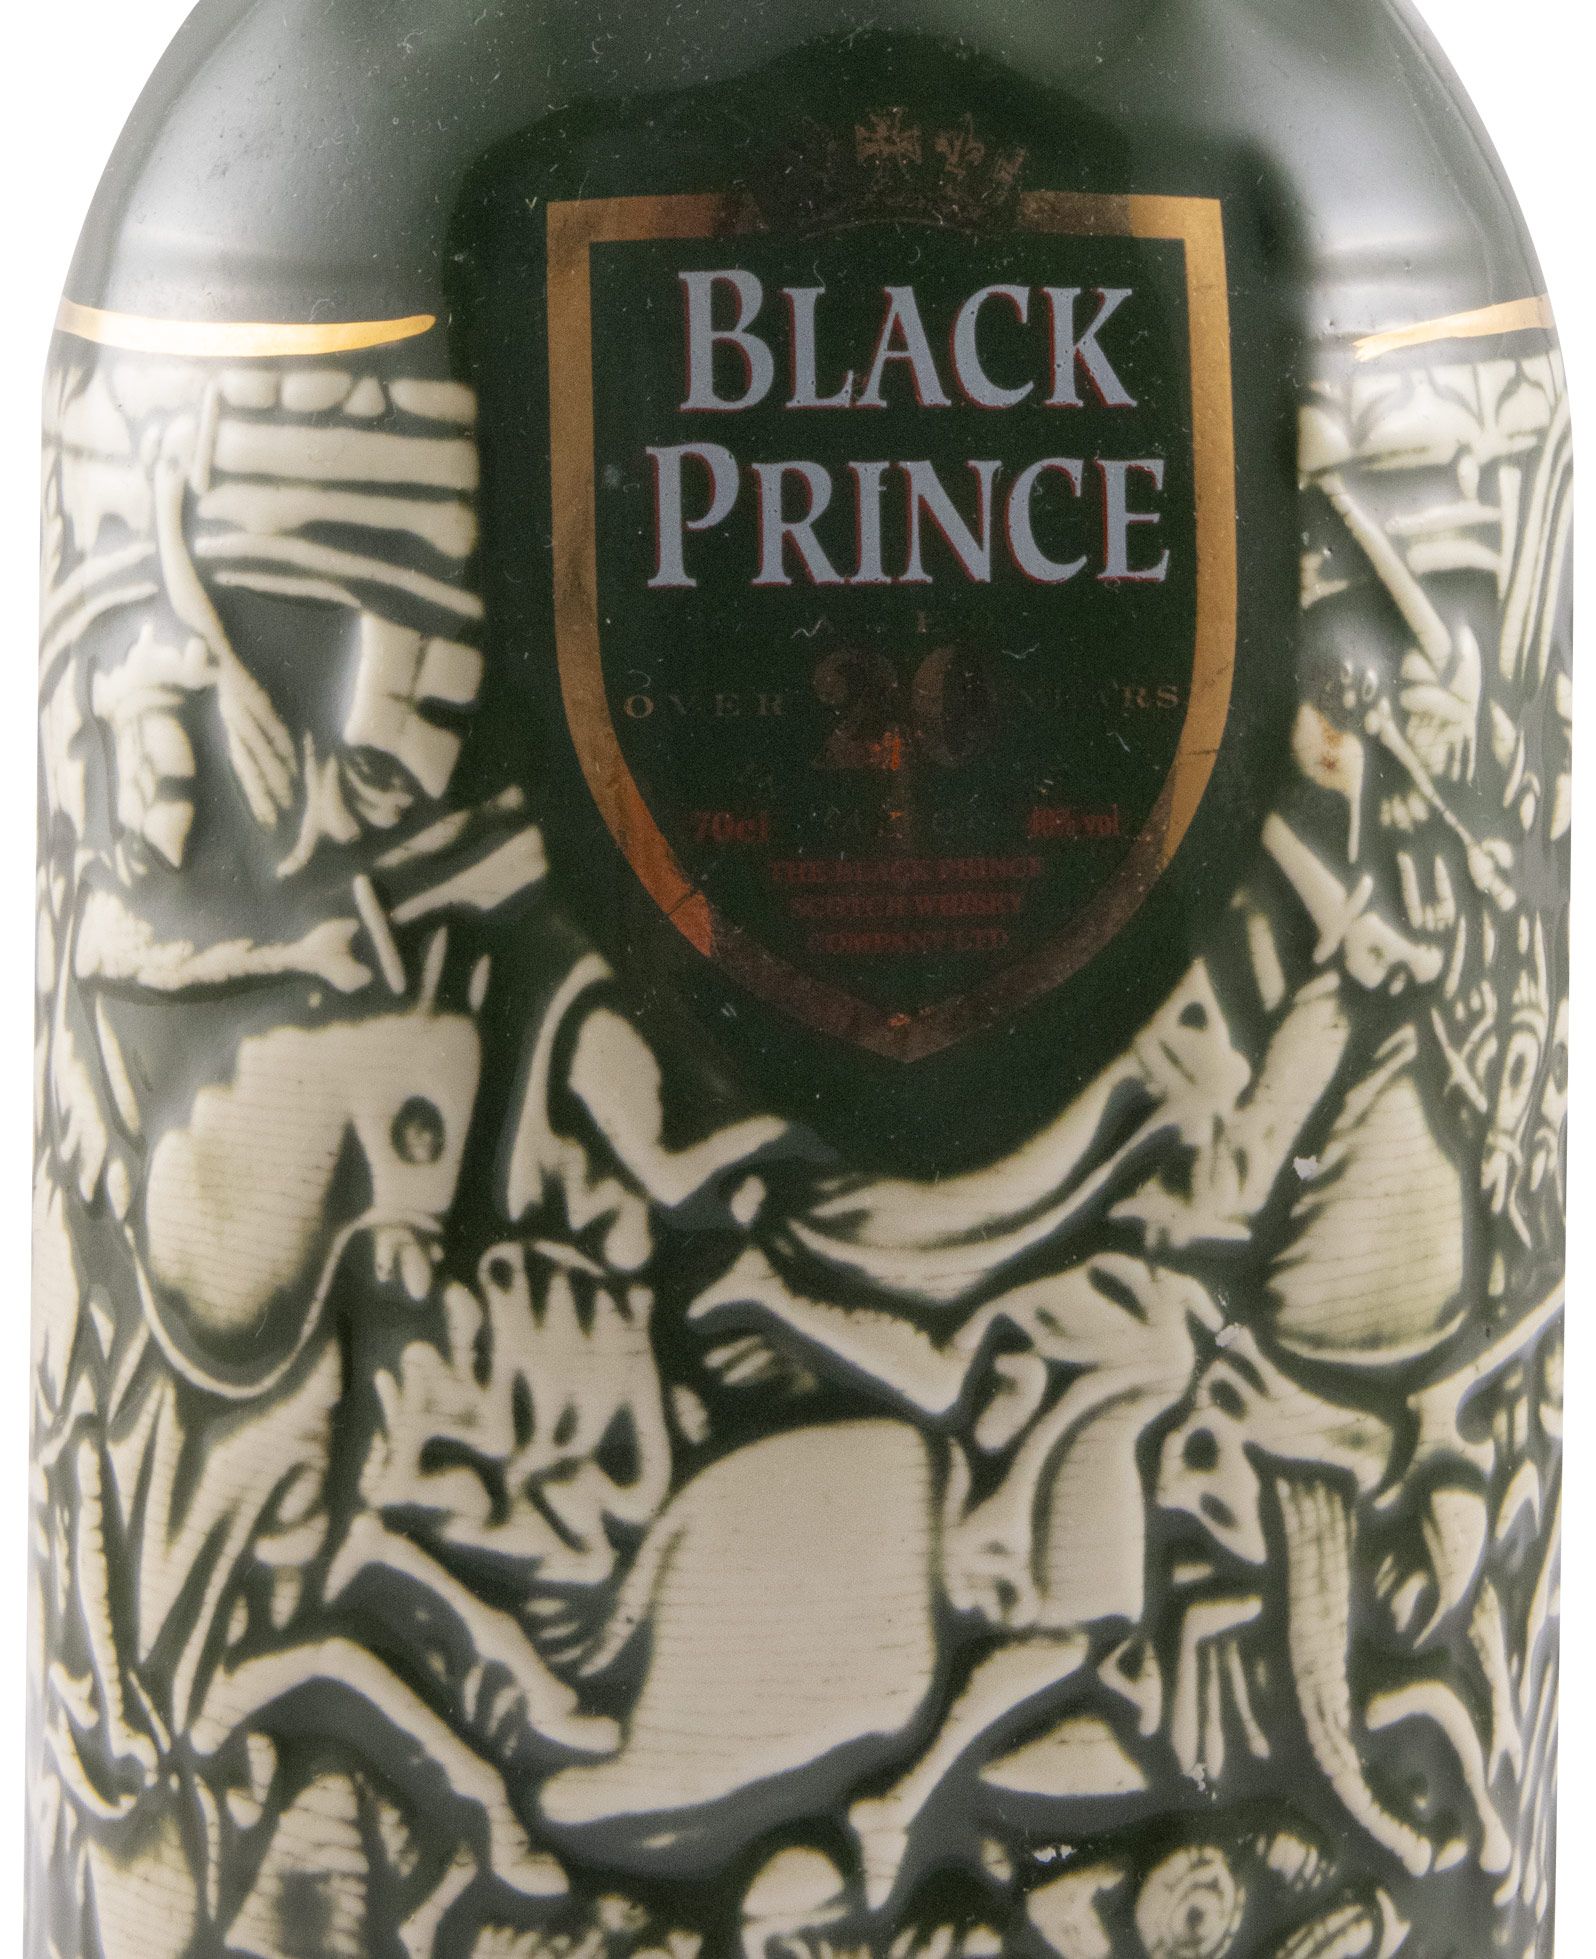 Black Prince 20 years (ceramic bottle)